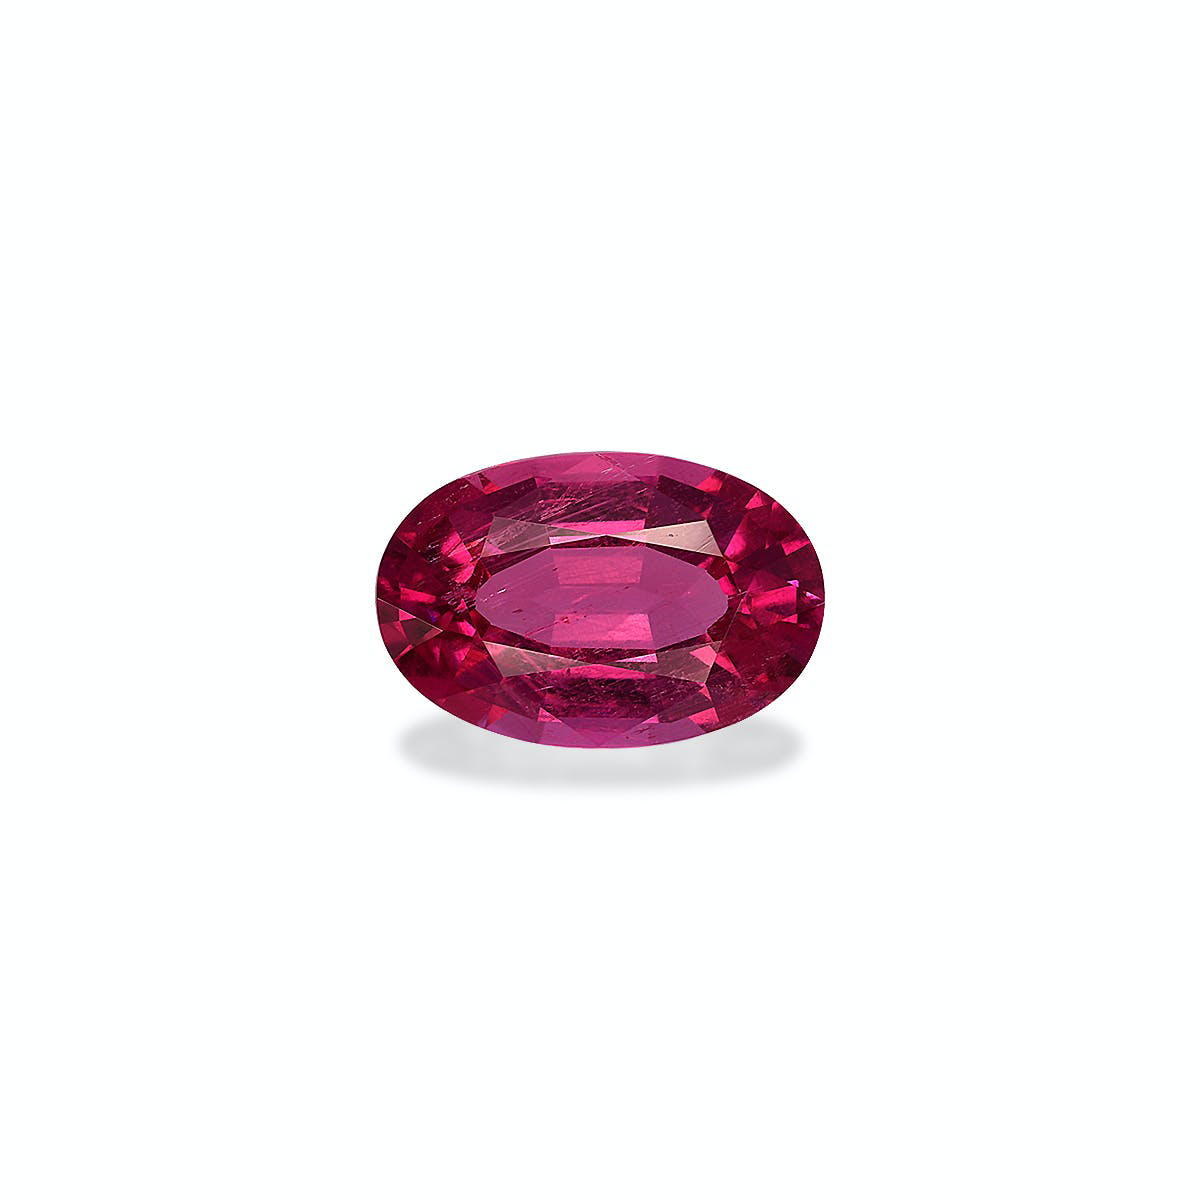 Picture of Vivid Pink Rubellite Tourmaline 3.63ct (RL1140)